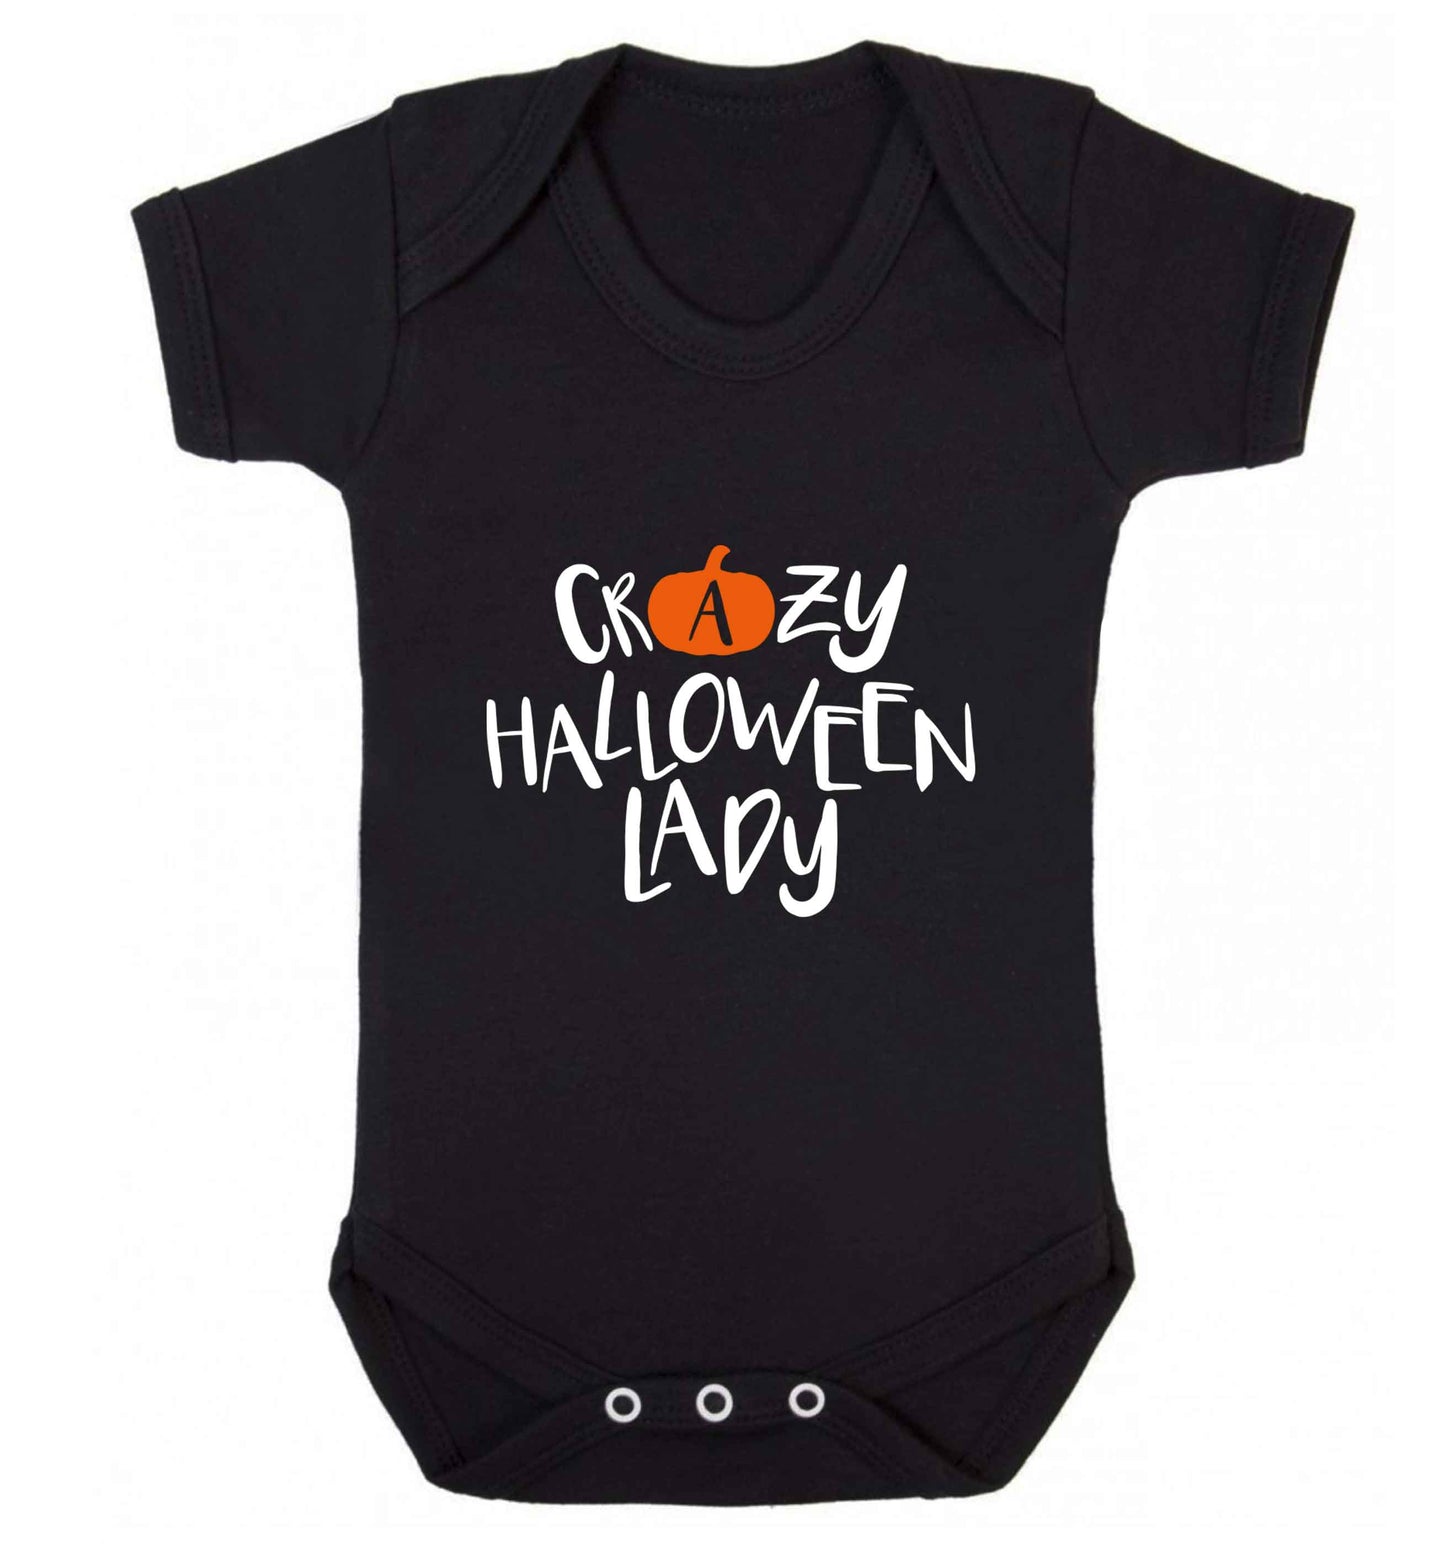 Crazy halloween lady baby vest black 18-24 months